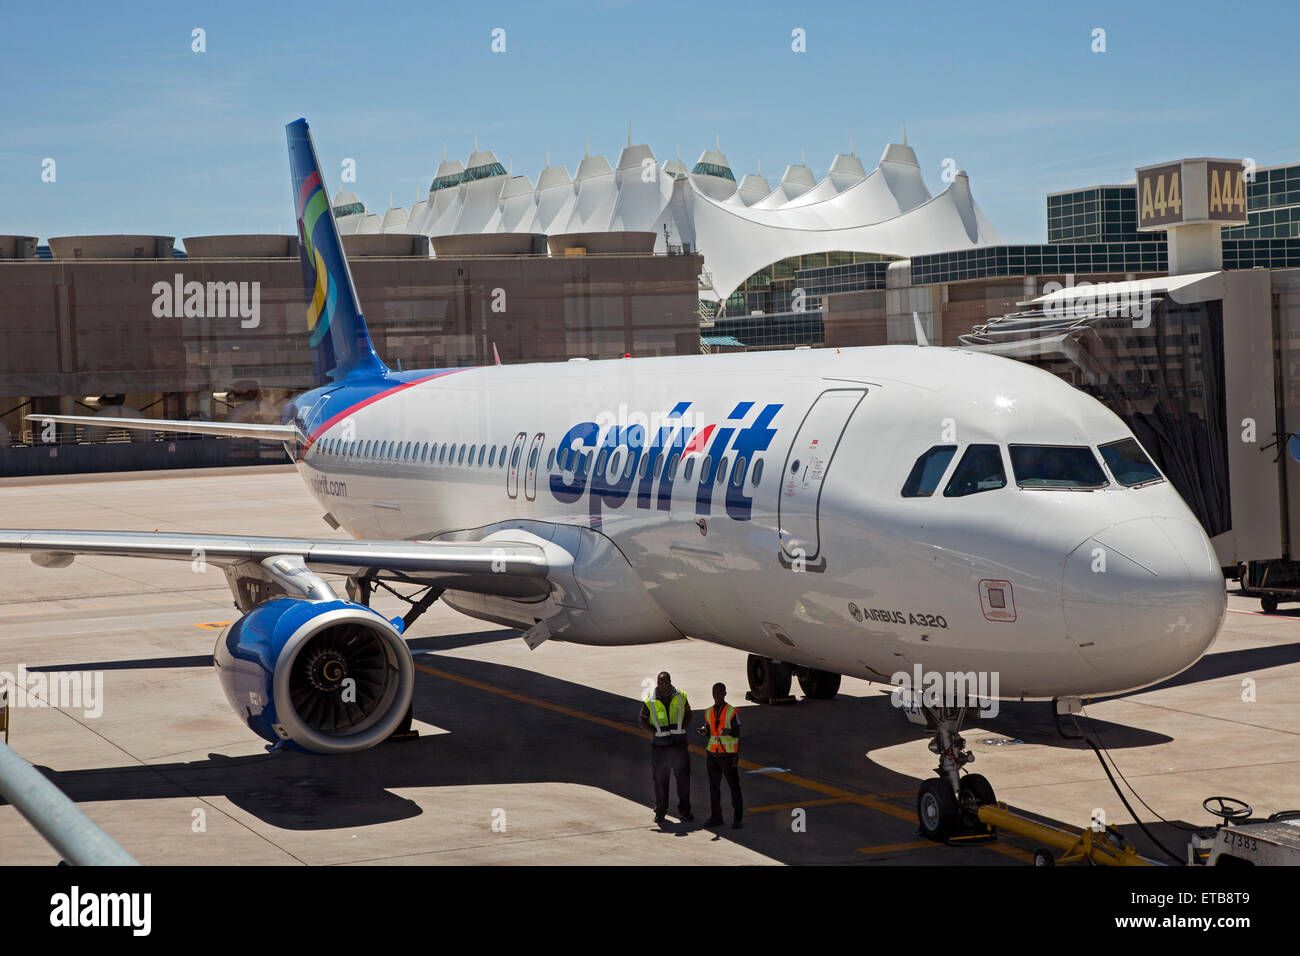 Denver, Colorado - A Spirit Airlines jet on the tarmac at Denver International Airport. Stock Photo